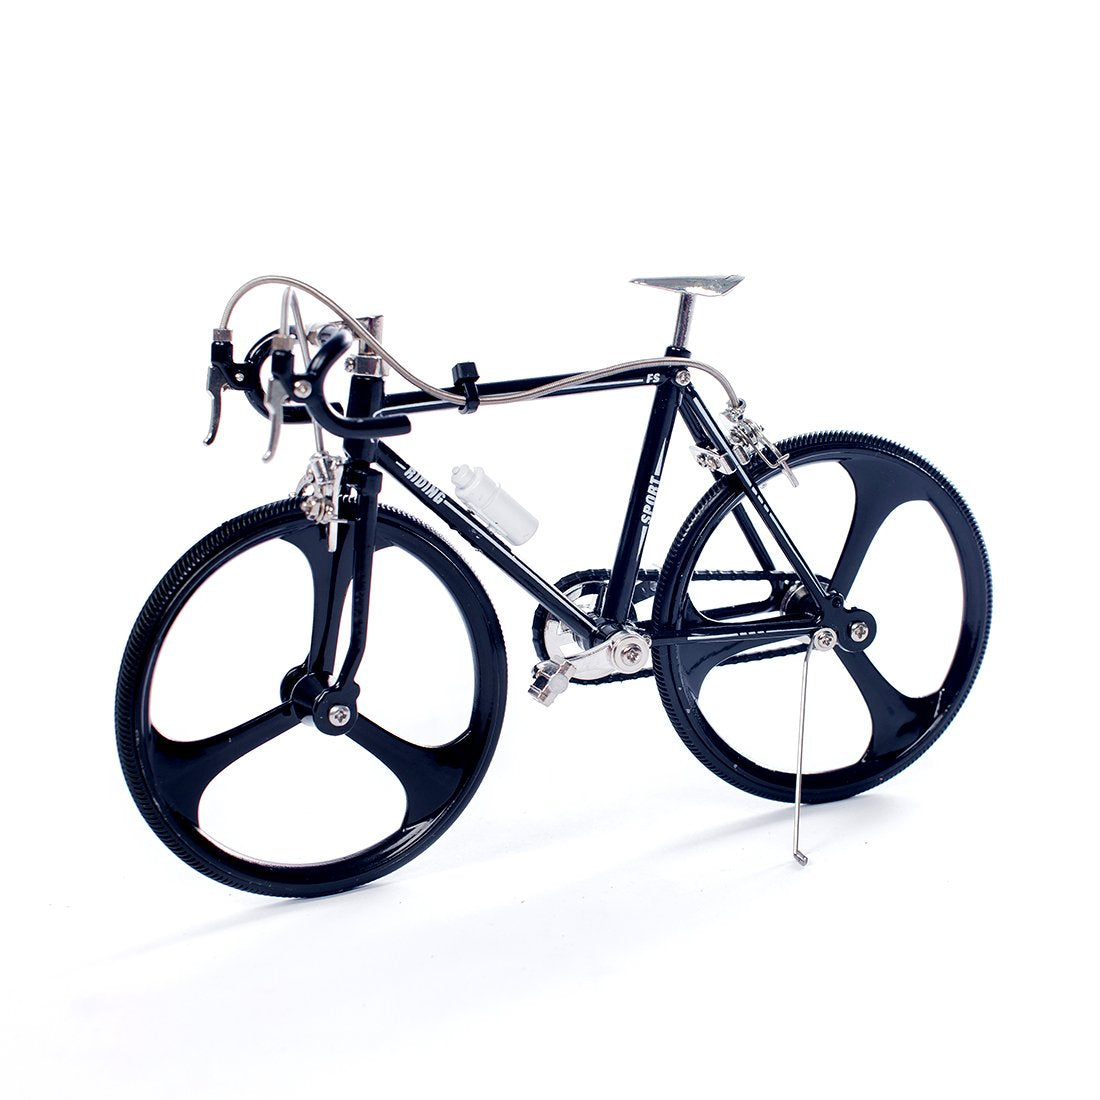 Metal DIY Racing Bike Cycling Bicycle Sports Assembly Model Kit